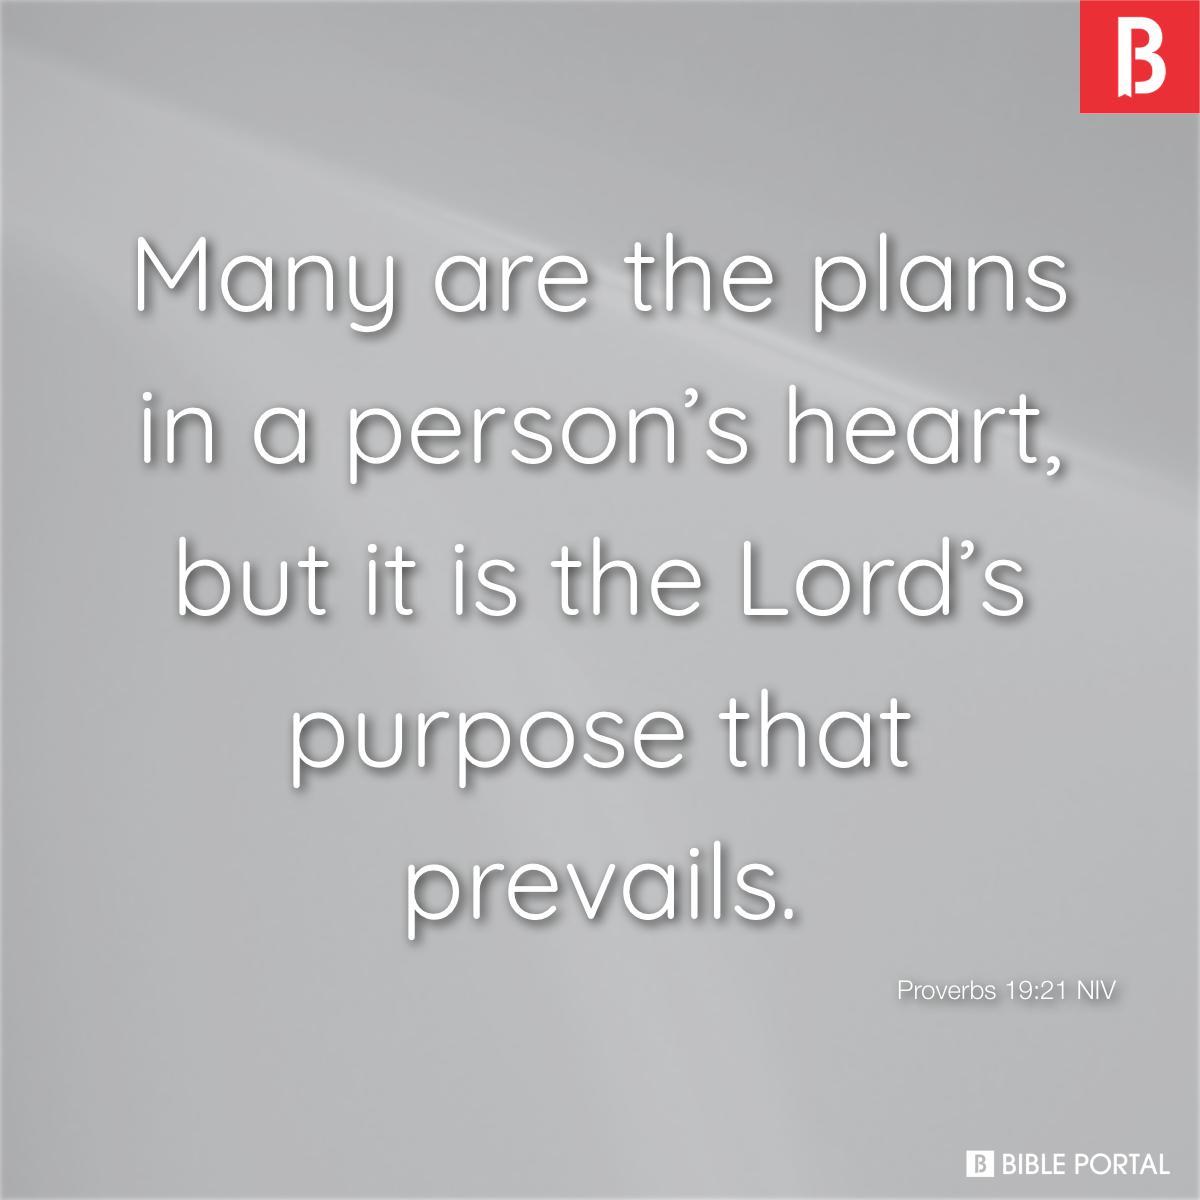 Proverbs 19:21 NIV